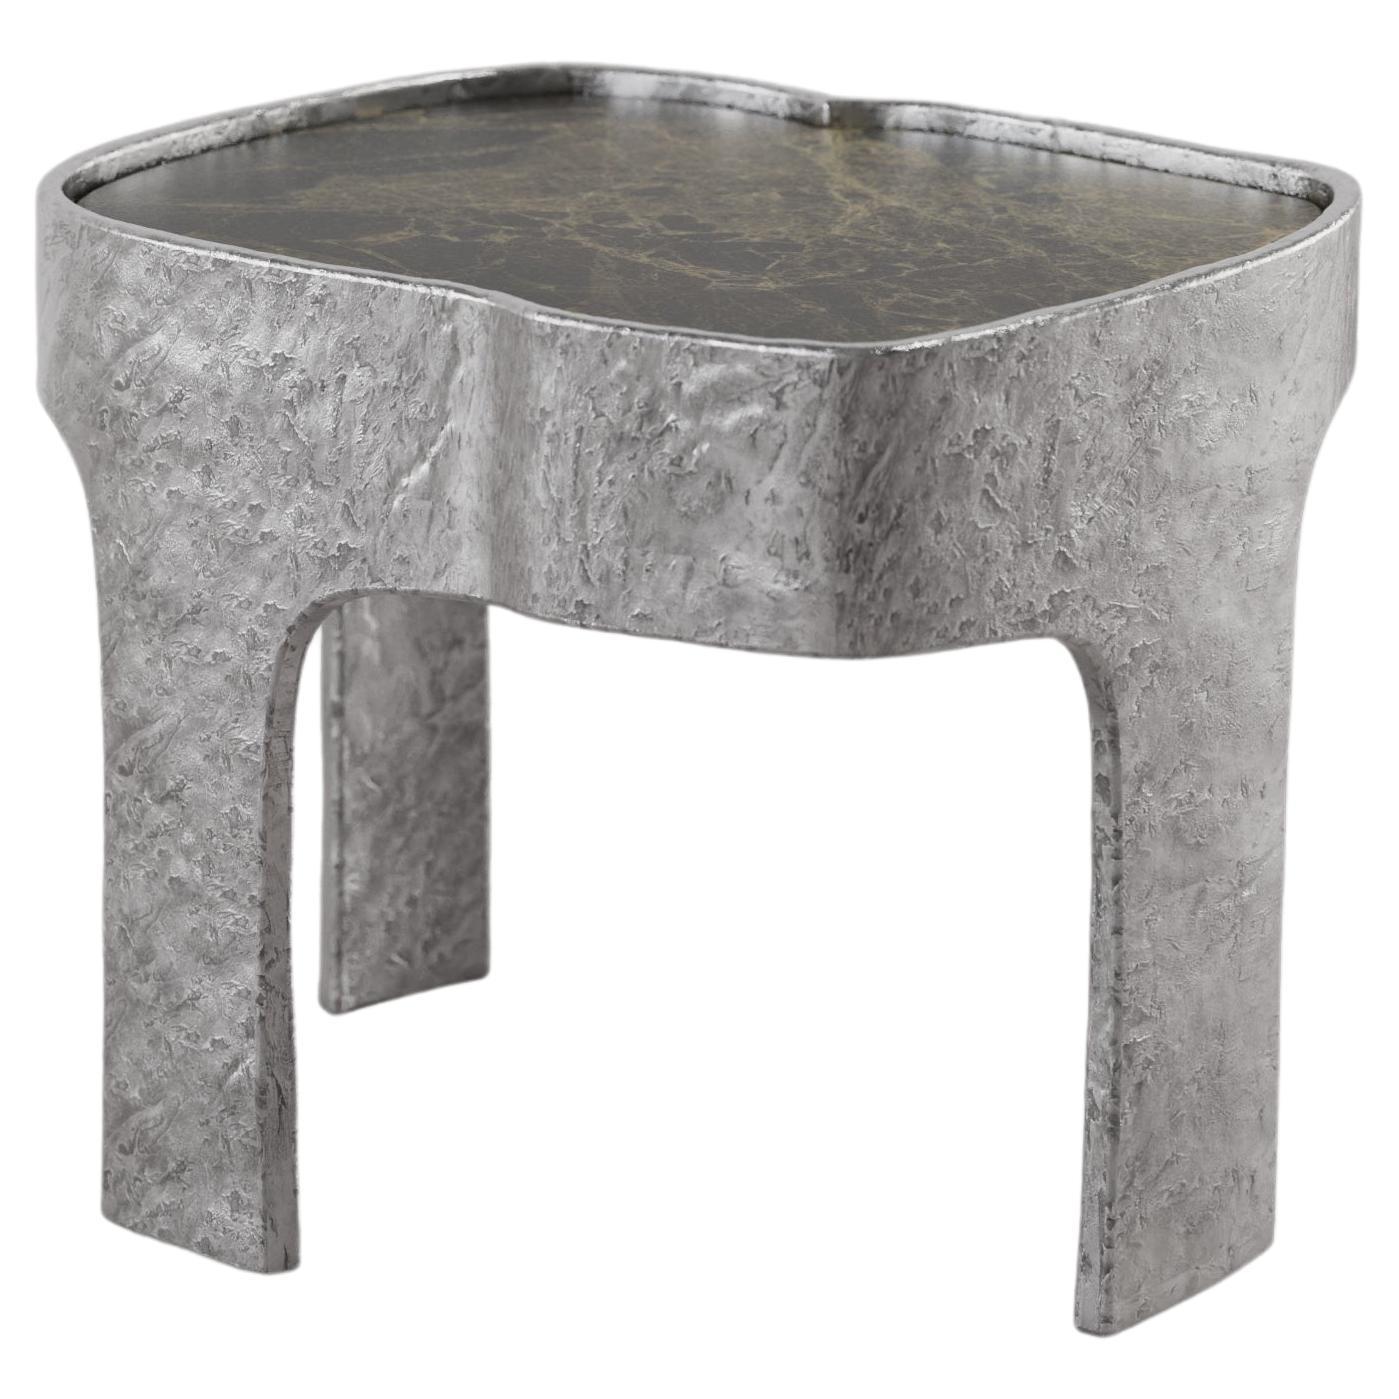 Contemporary LimitedEdition Marble Silver Table, Sumatra V1 by Edizione Limitata